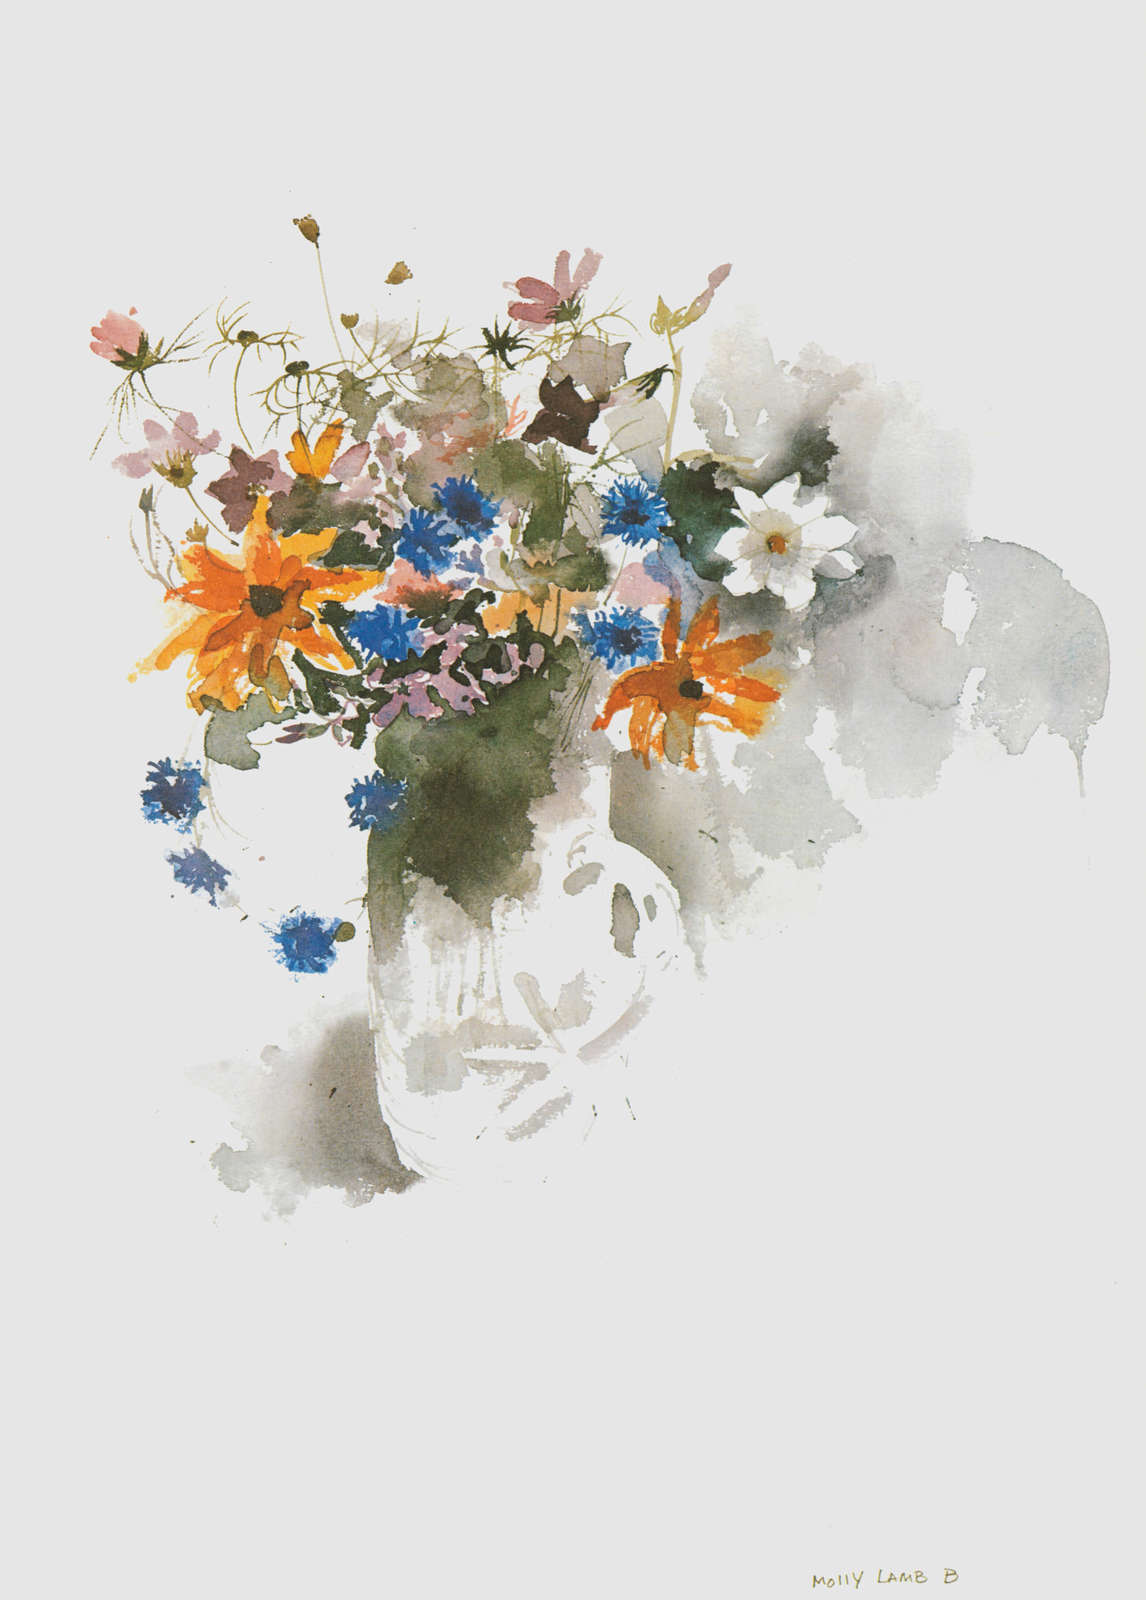 Molly Lamb Bobak, « Une cruche de fleurs d’août », 1977, illustration tirée de Wild Flowers of Canada: Impressions and Sketches of a Field Artist